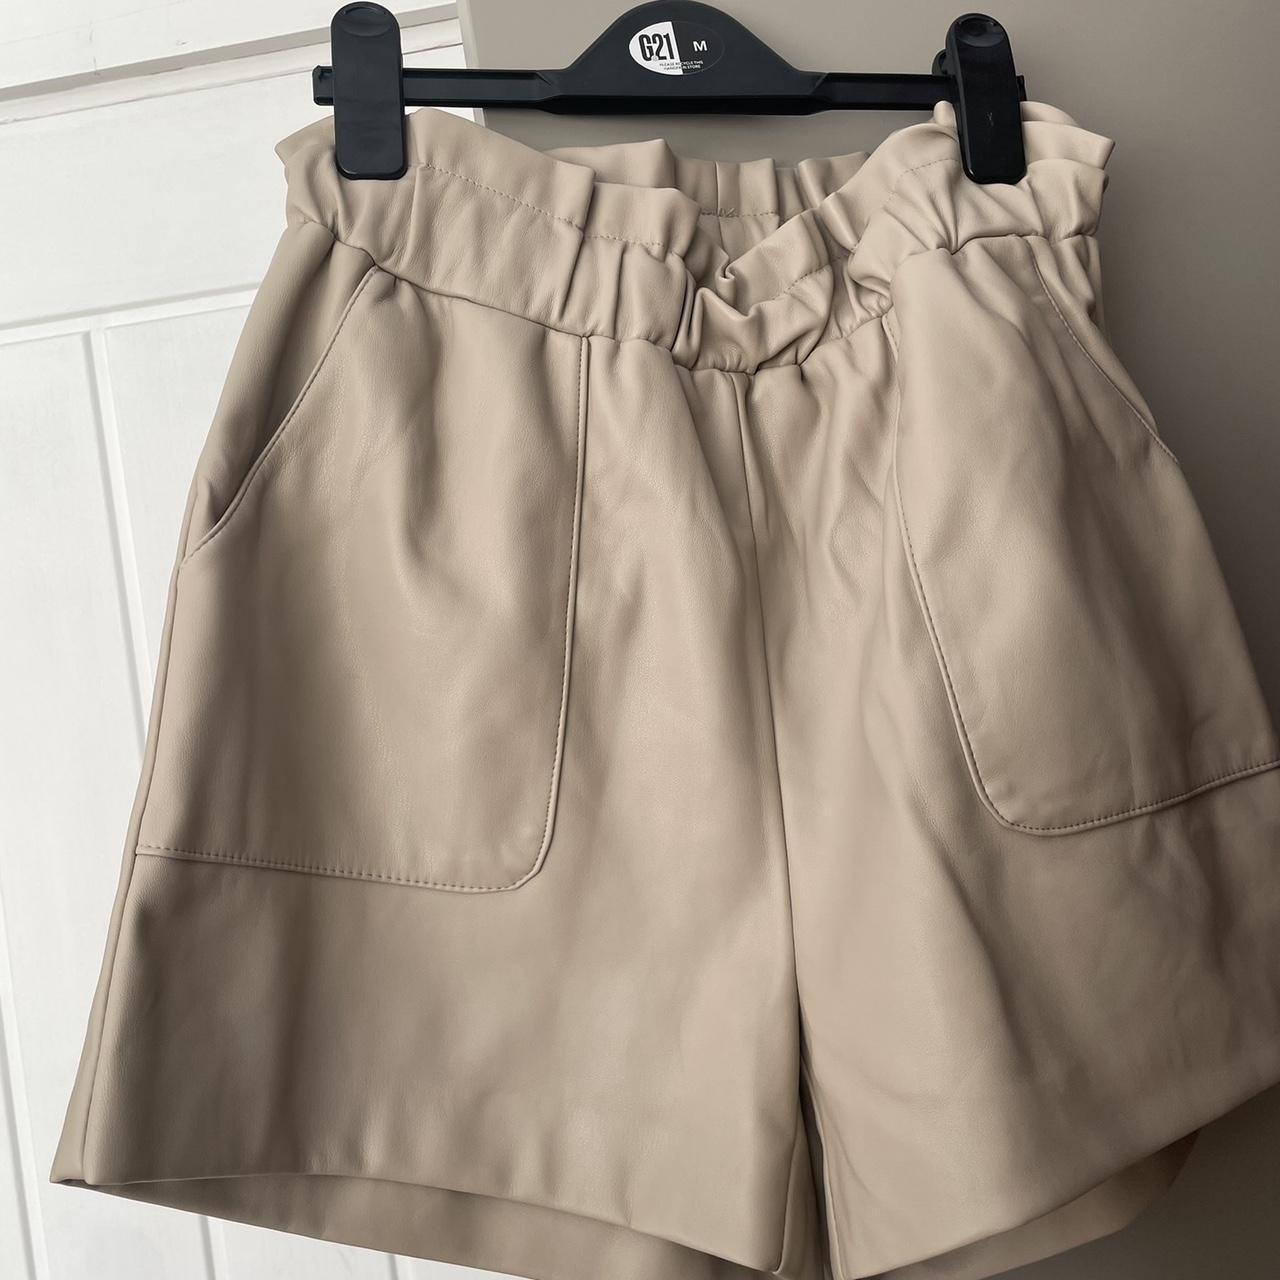 Primark beige paper bag leather shorts size small - Depop